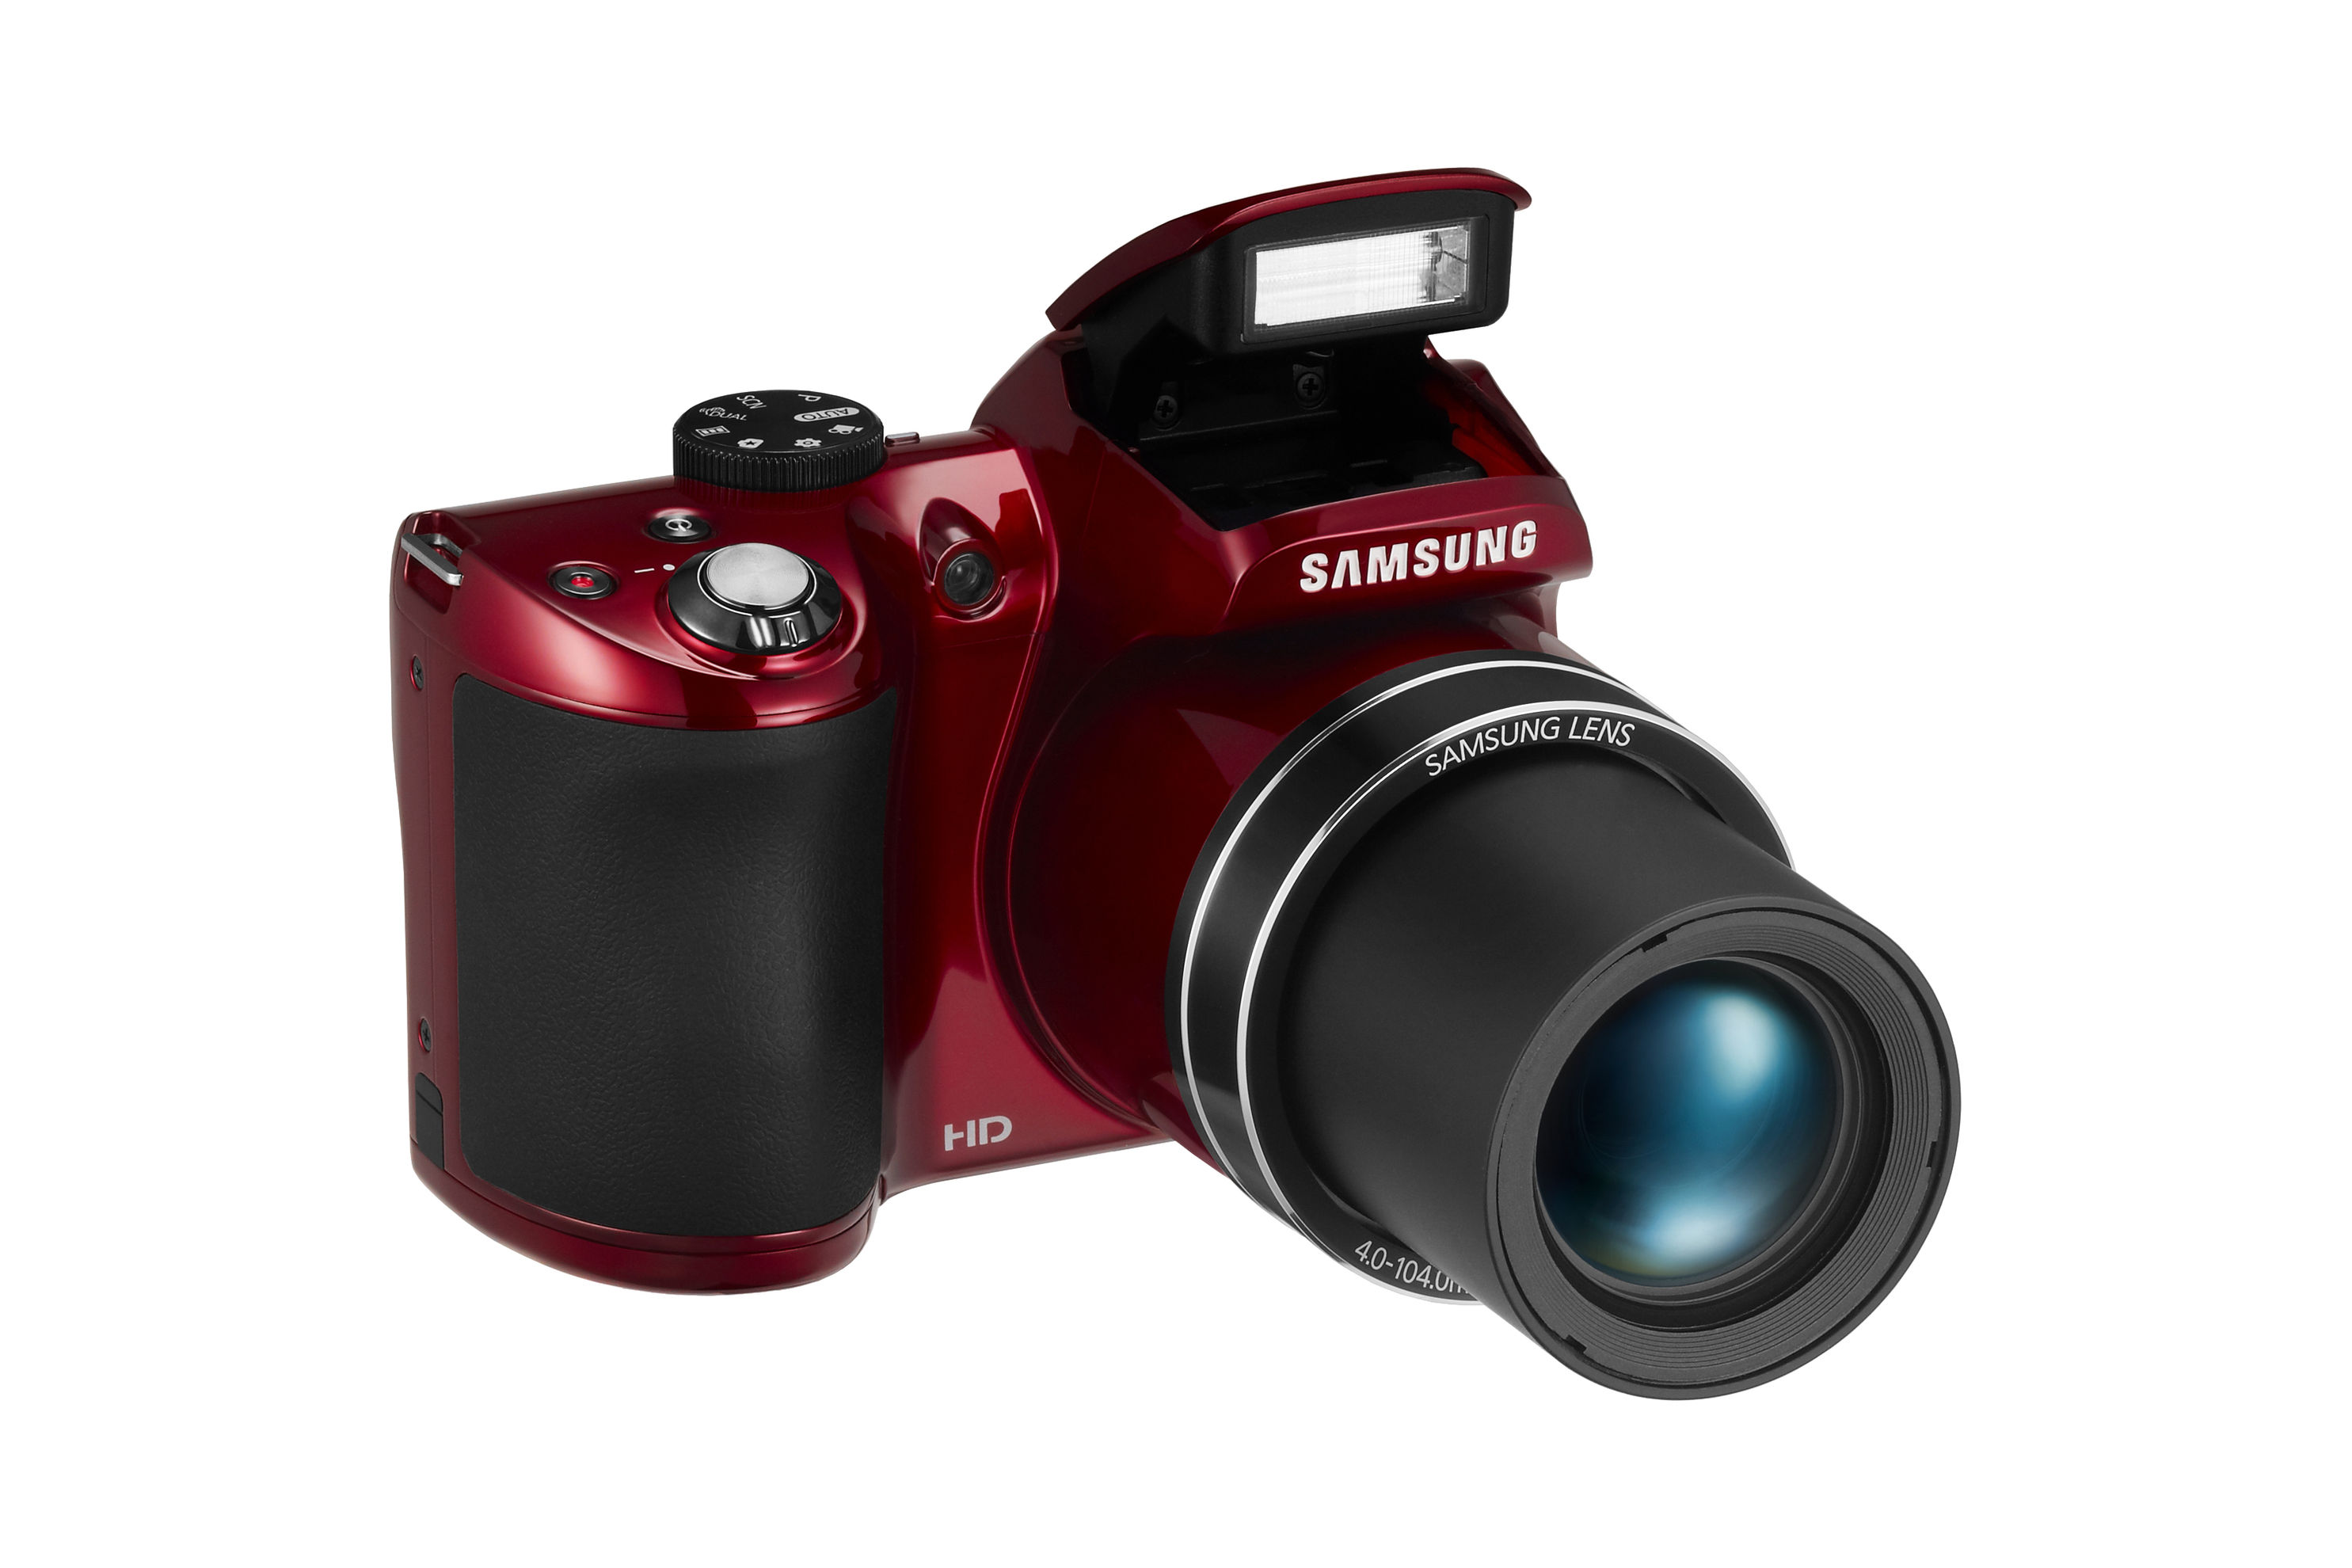 Samsung Digitalkamera WB110 Farbe: rot bestellen | Weltbild.de